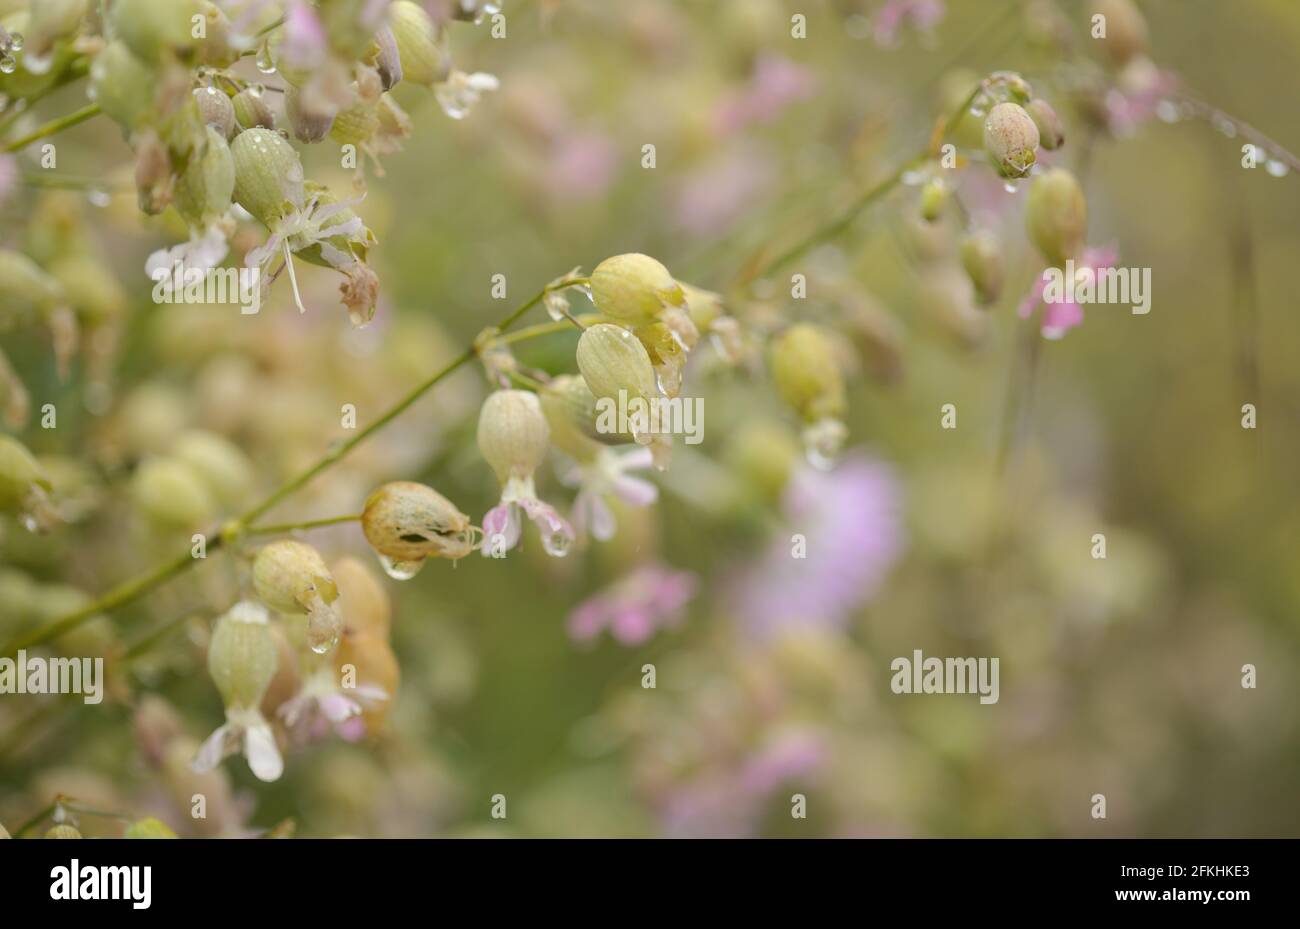 Flora of Gran Canaria -  Silene vulgaris, the bladder campion, natural macro floral background Stock Photo